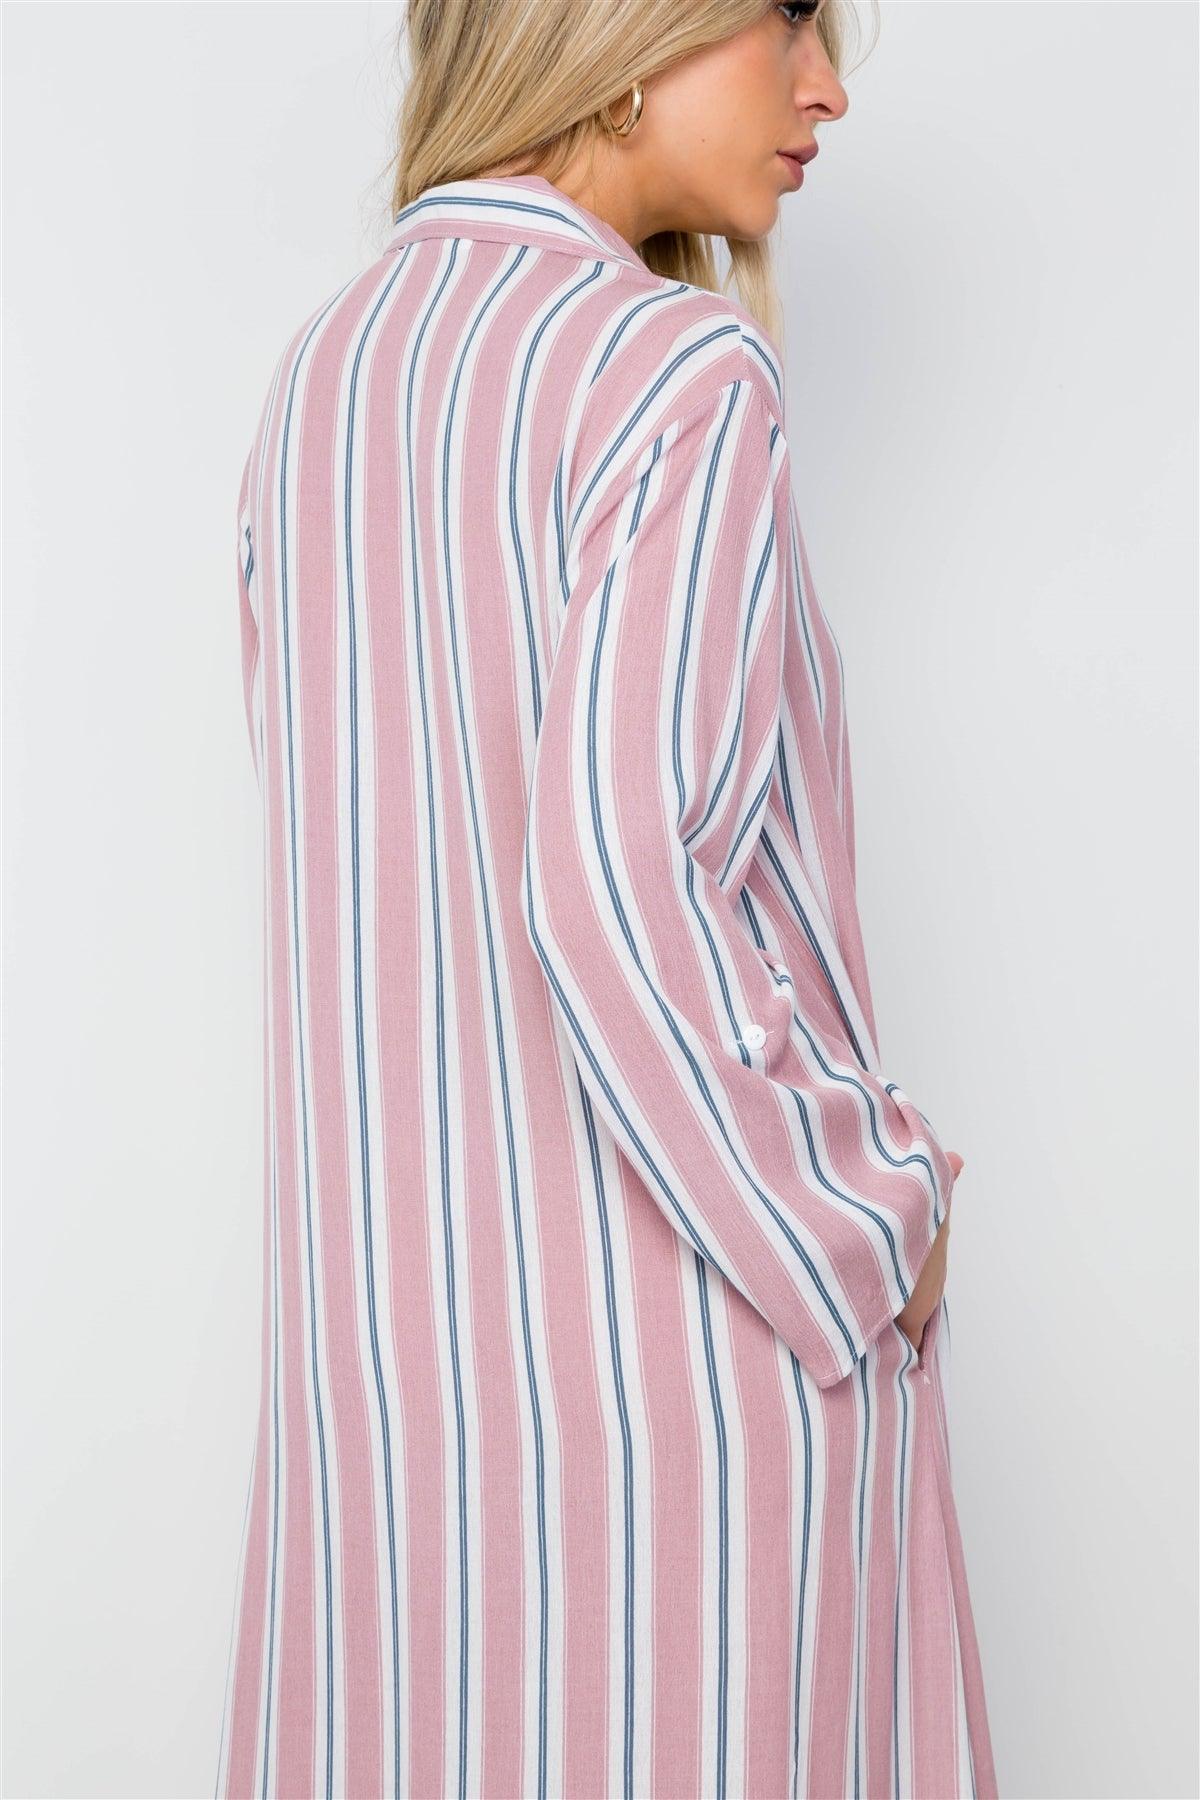 Mauve Multi Stripe Button Down Dress Maxi Blouse Shirt / 2-2-2